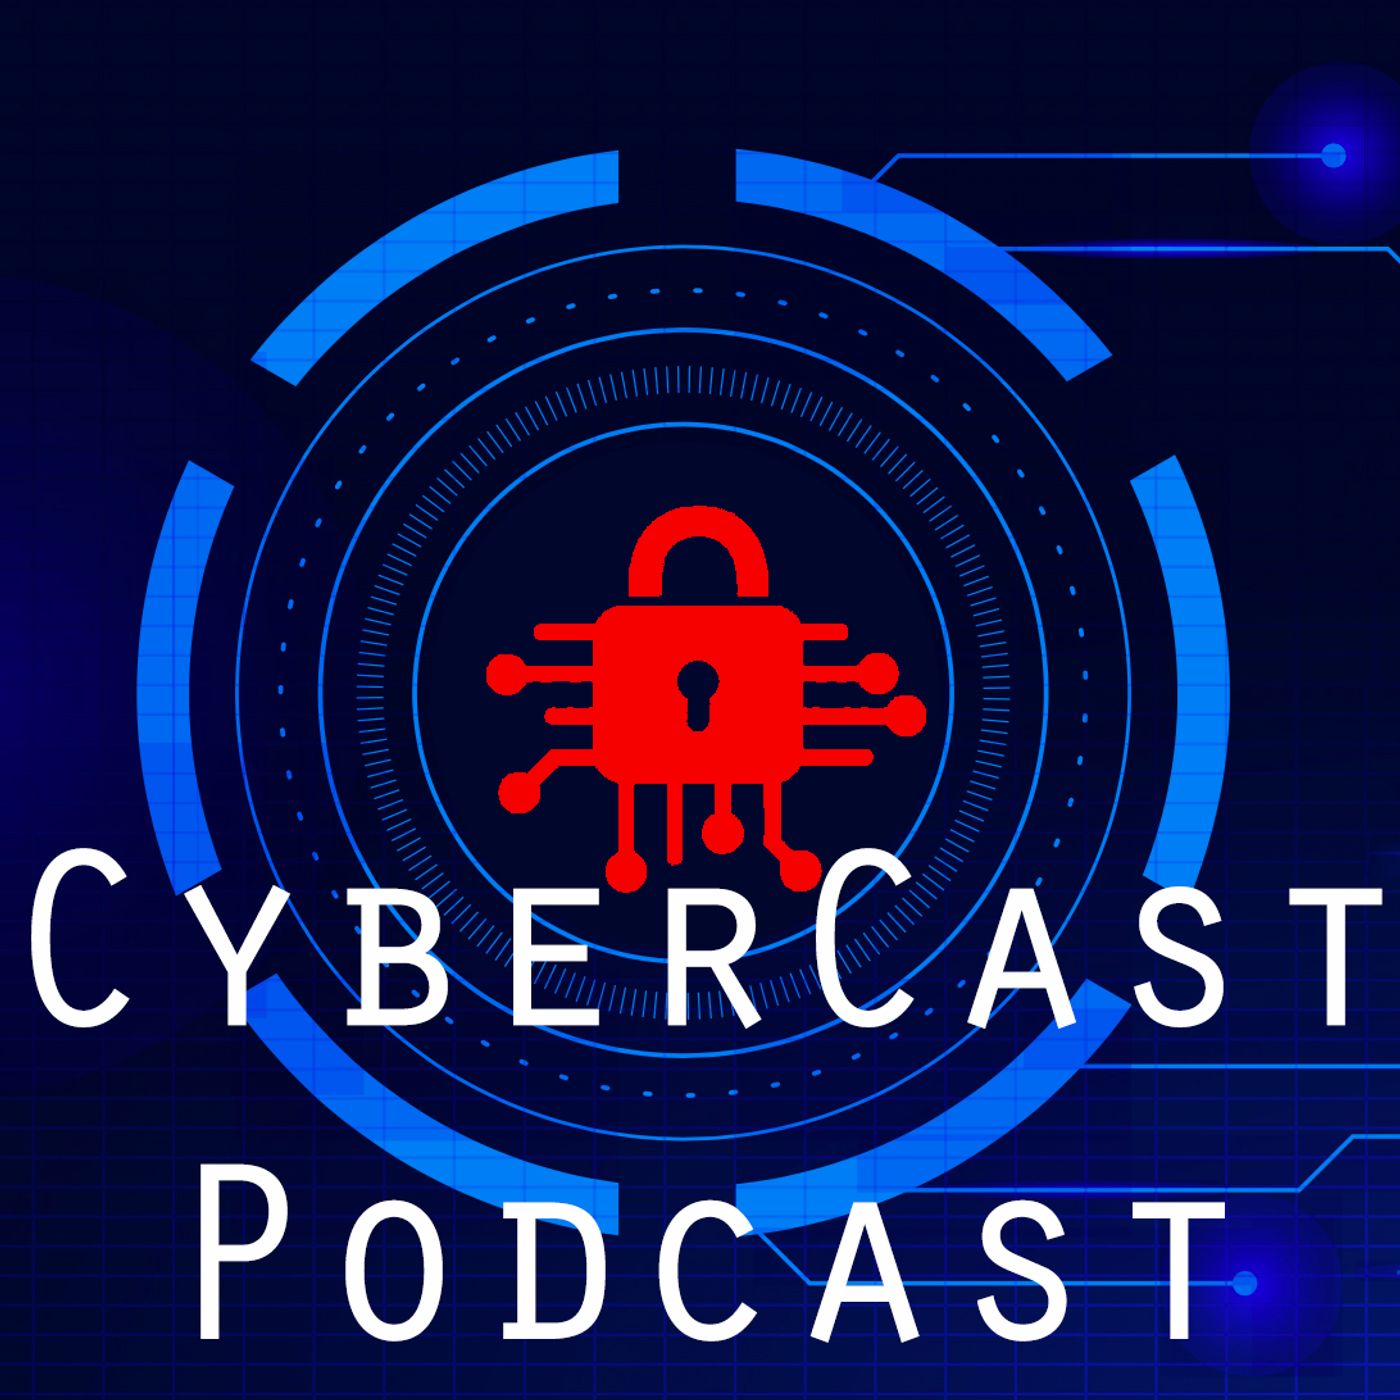 AUDIO BLOG: CyberCast Podcast Eps2